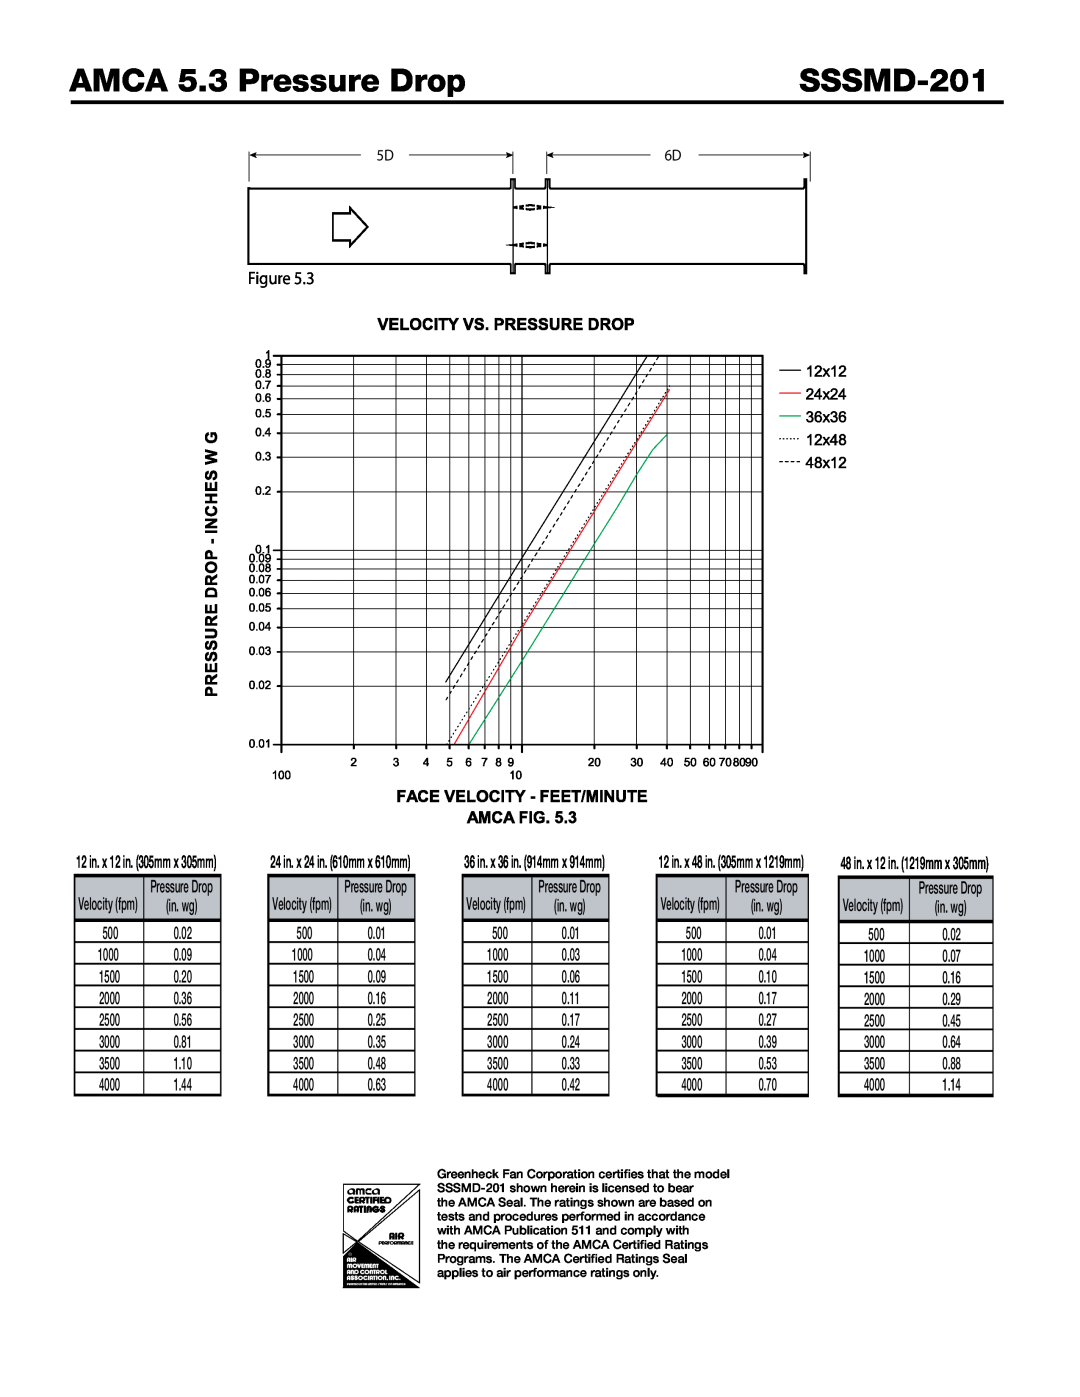 Greenheck Fan SSSMD-201 dimensions AMCA 5.3 Pressure Drop 